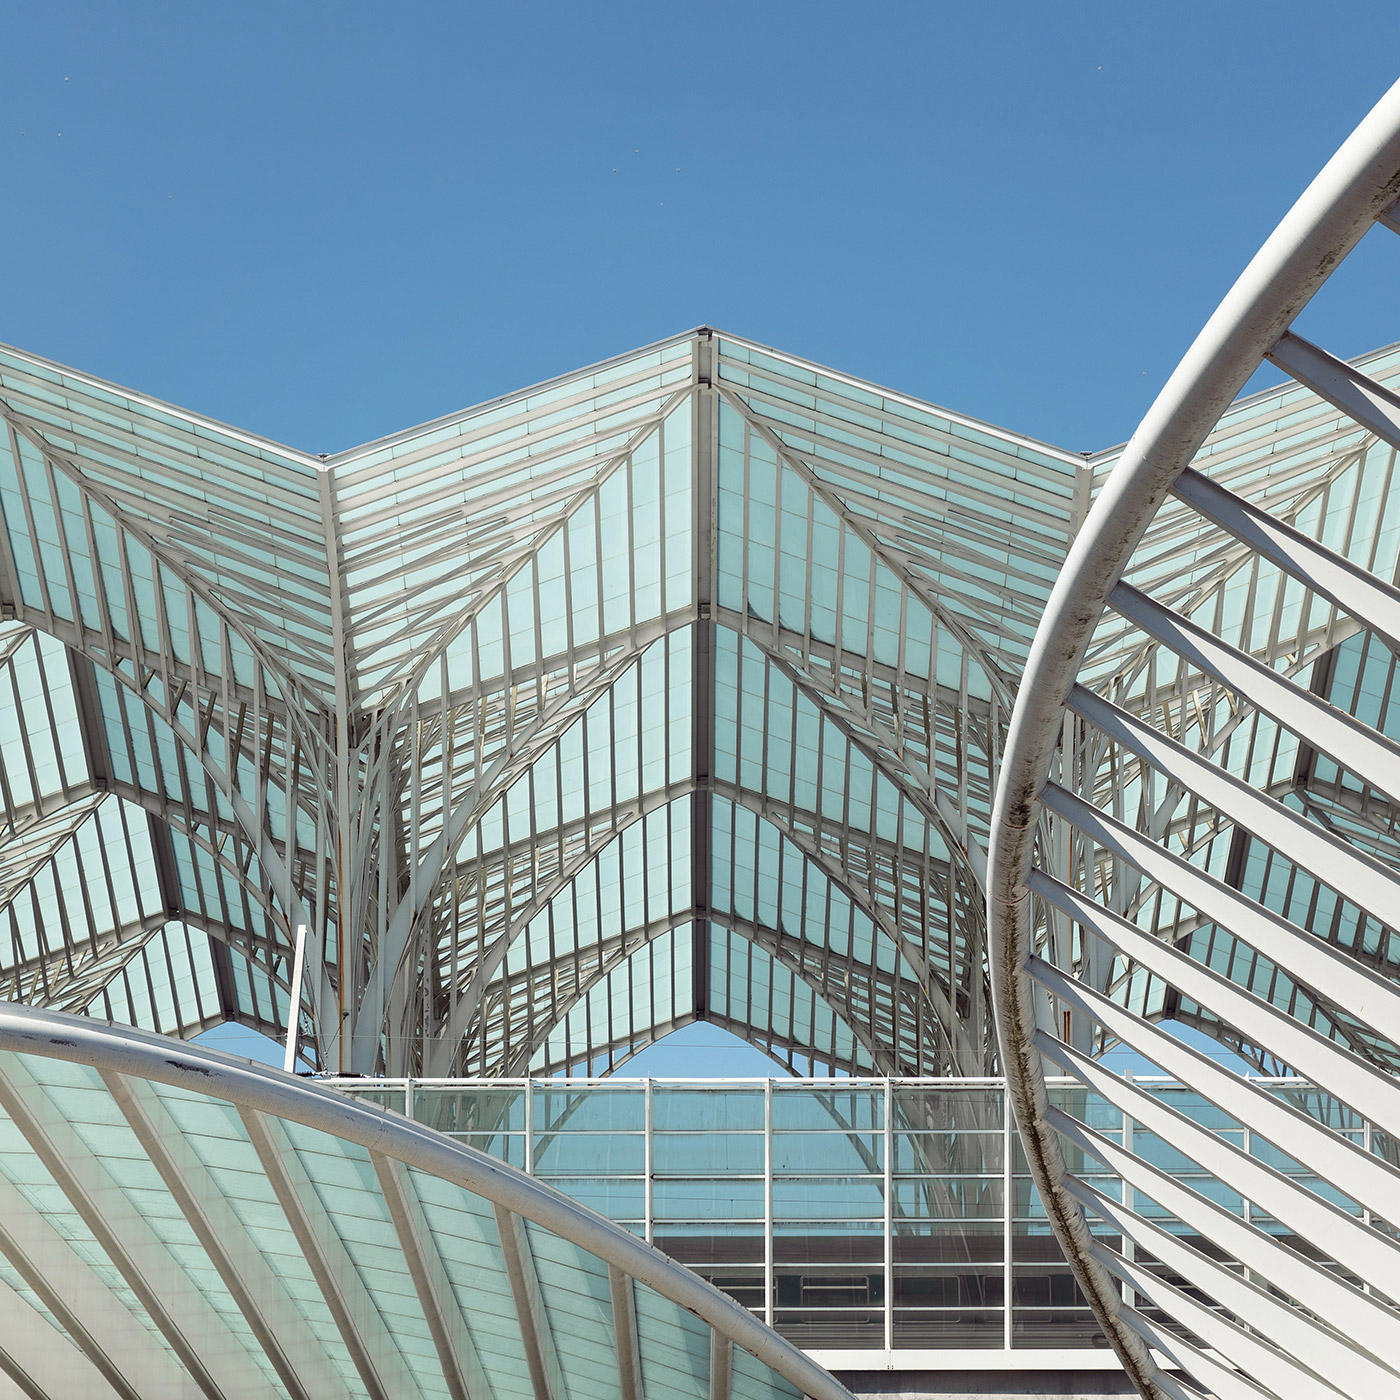 Gare do Oriente . Location: Lisbon, Portugal . Architect: Santiago Calatrava